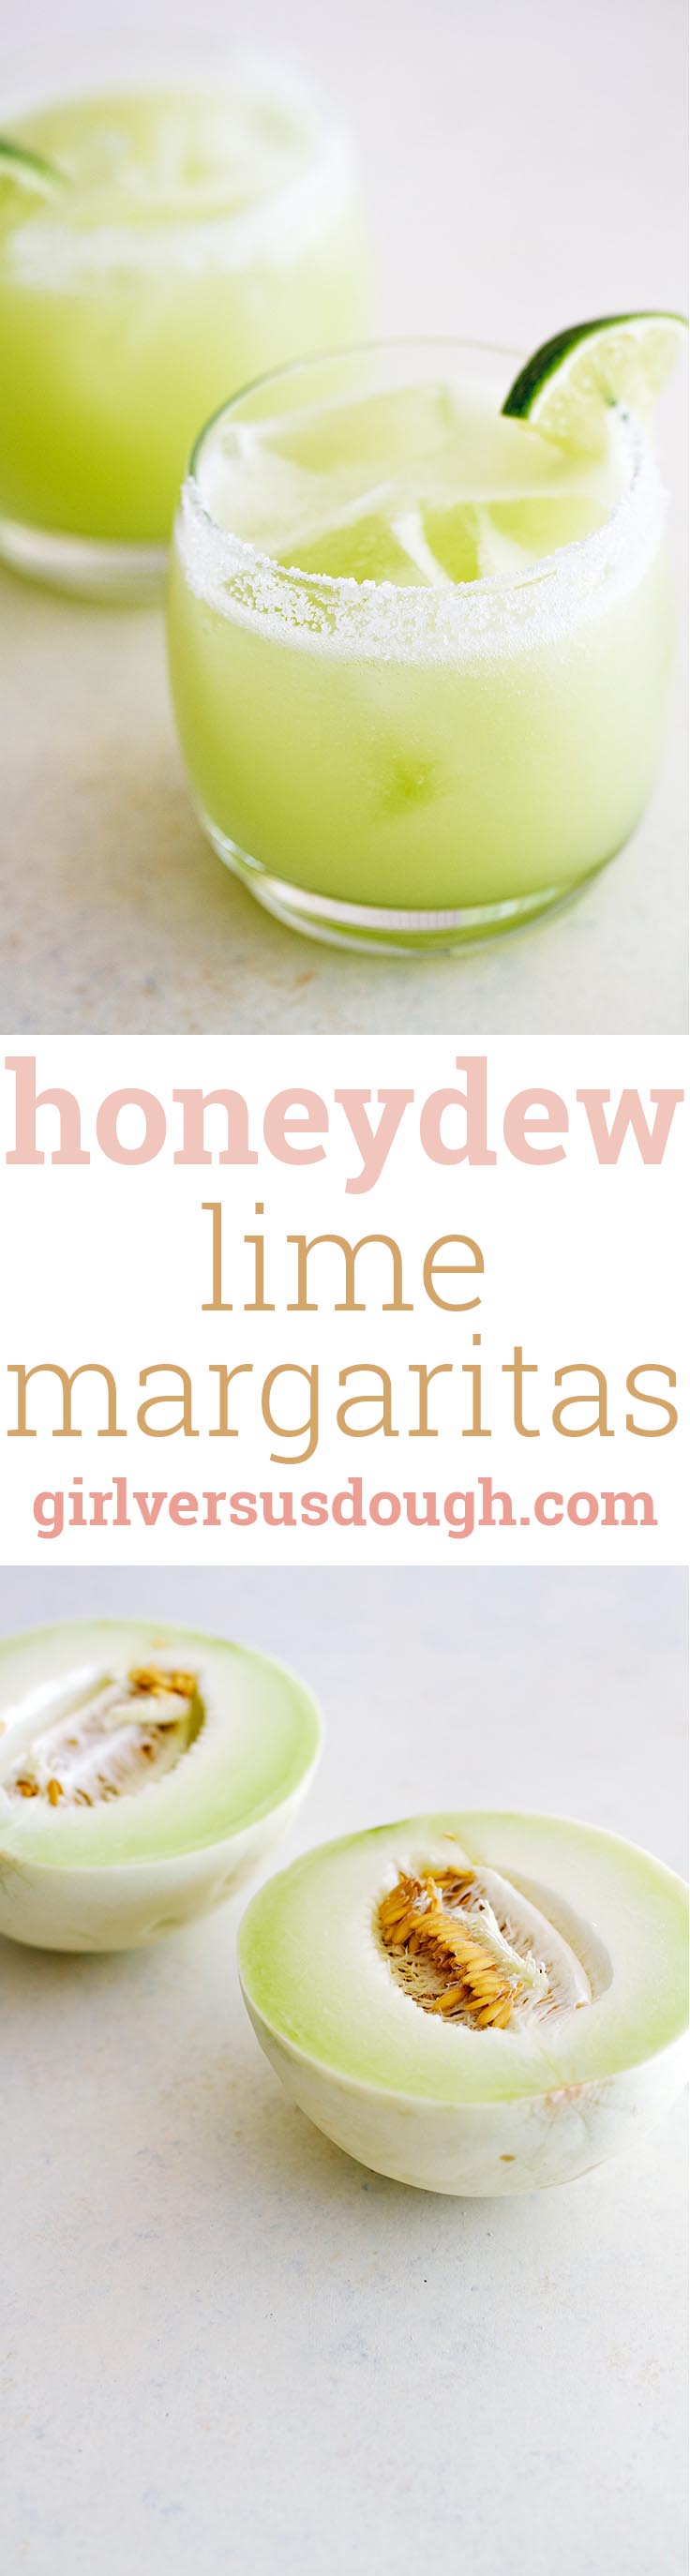 Honeydew Lime Margaritas -- Honeydew melon puree and lime juice make this margarita extra refreshing and delicious! girlversusdough.com @girlversusdough